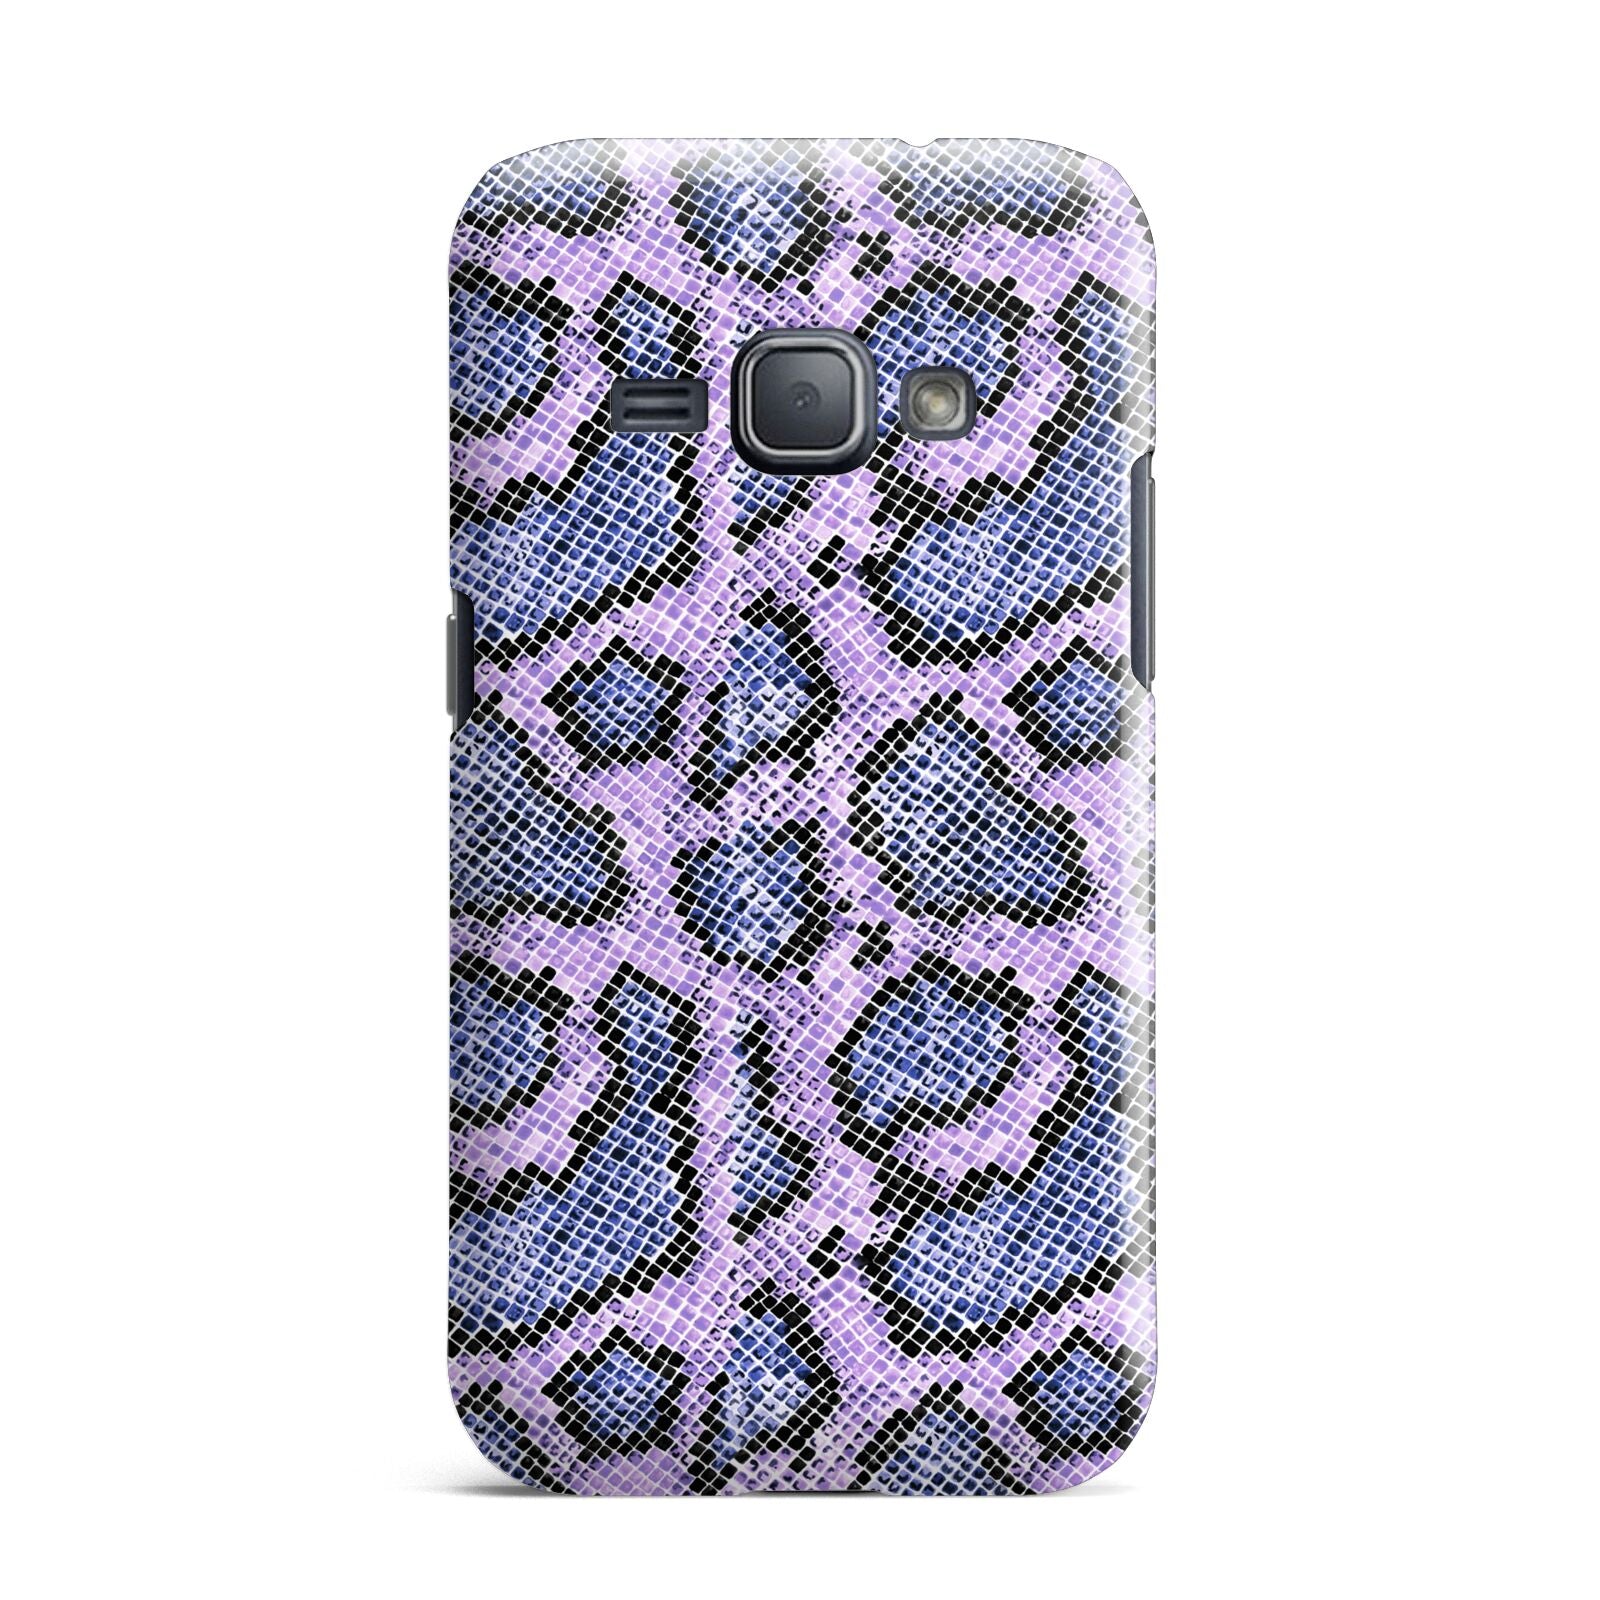 Purple And Blue Snakeskin Samsung Galaxy J1 2016 Case